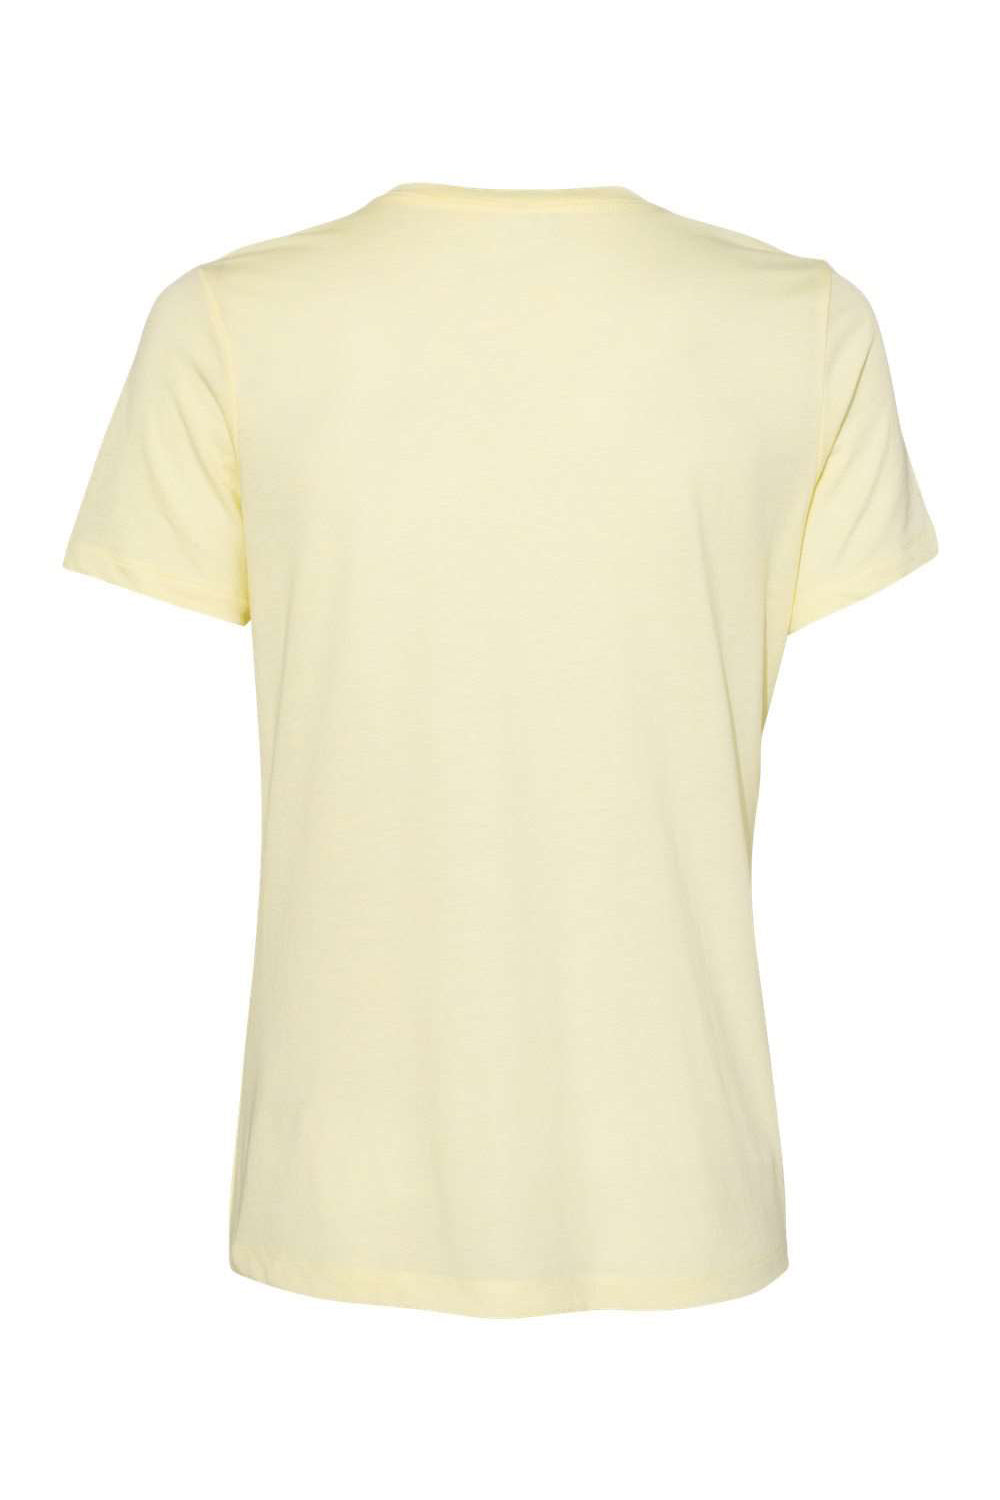 Bella + Canvas BC6413 Womens Short Sleeve Crewneck T-Shirt Pale Yellow Flat Back